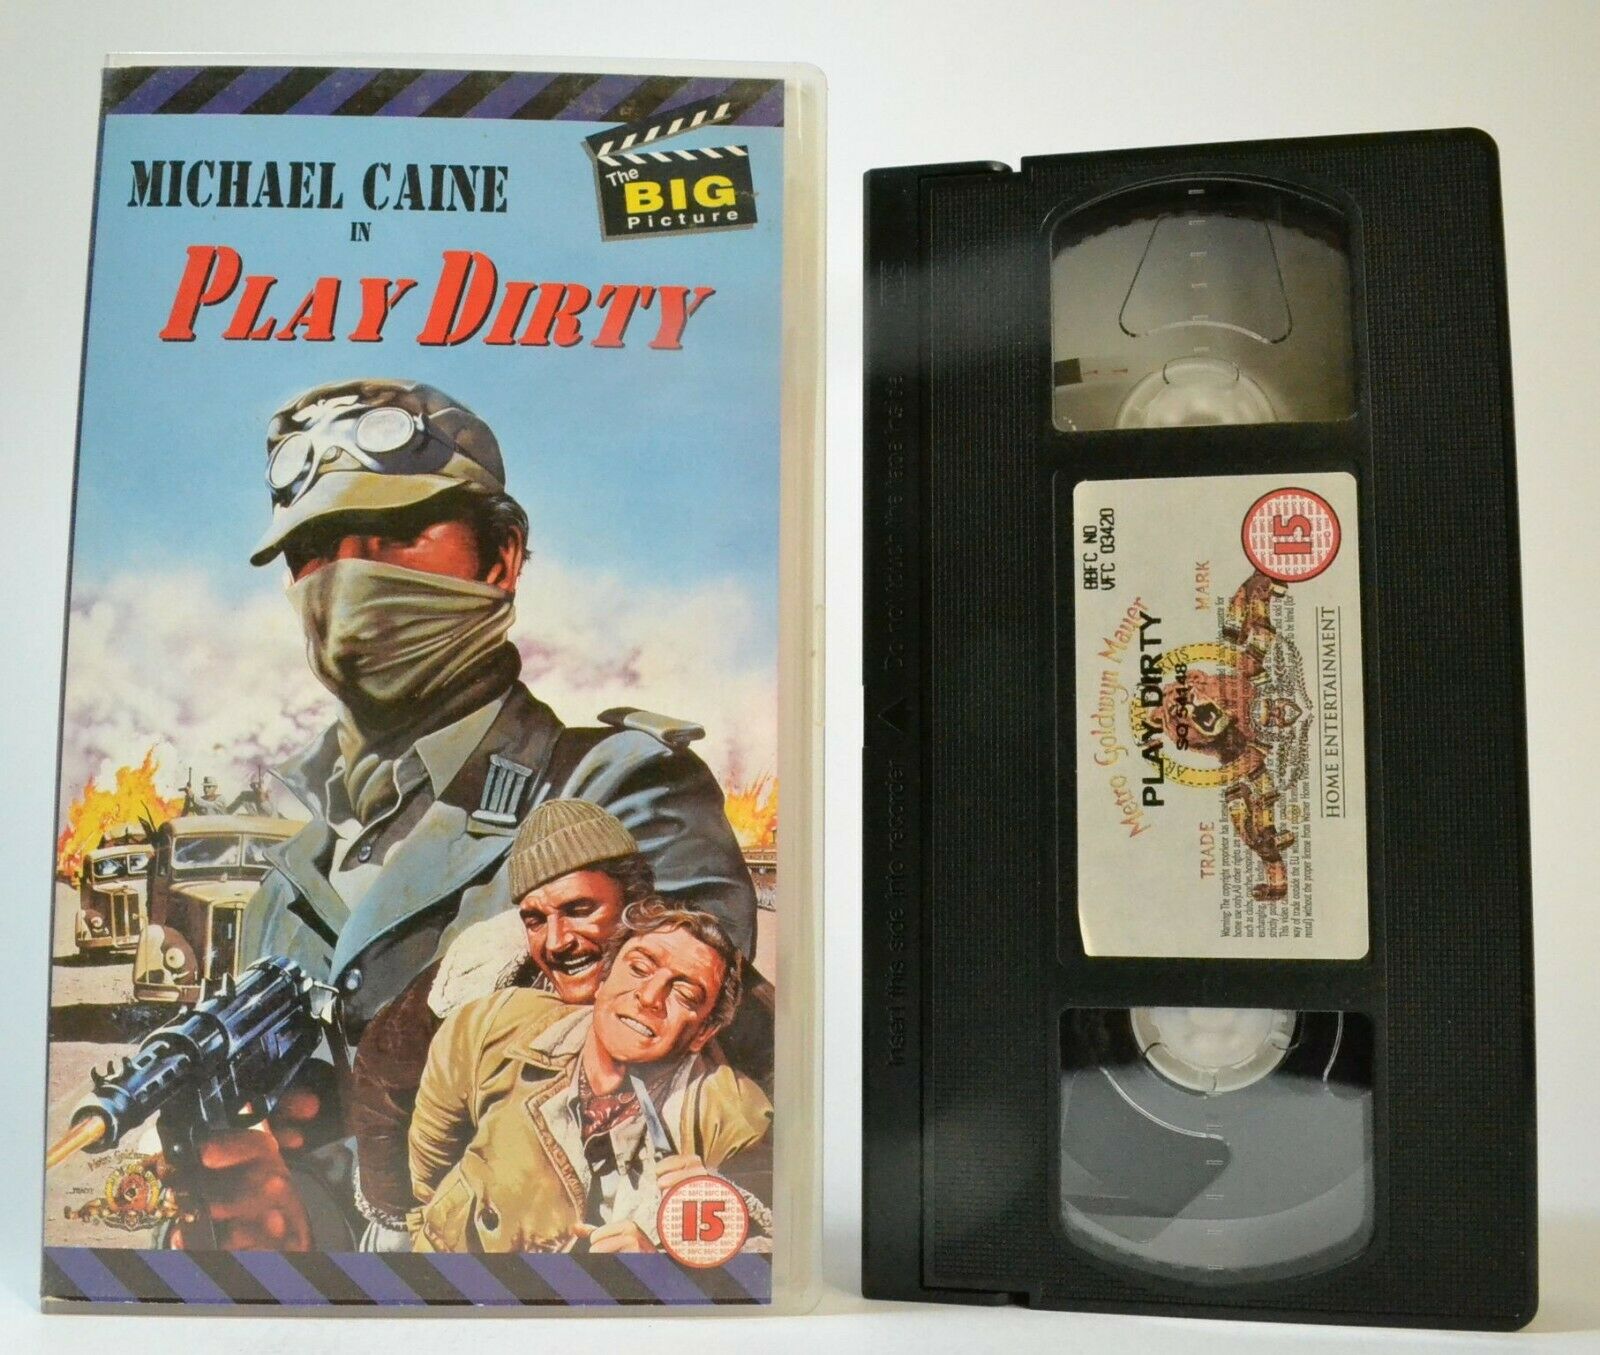 Play Dirty (1969): War Drama - Adventure - Michael Caine / Nigel Davenport - VHS-